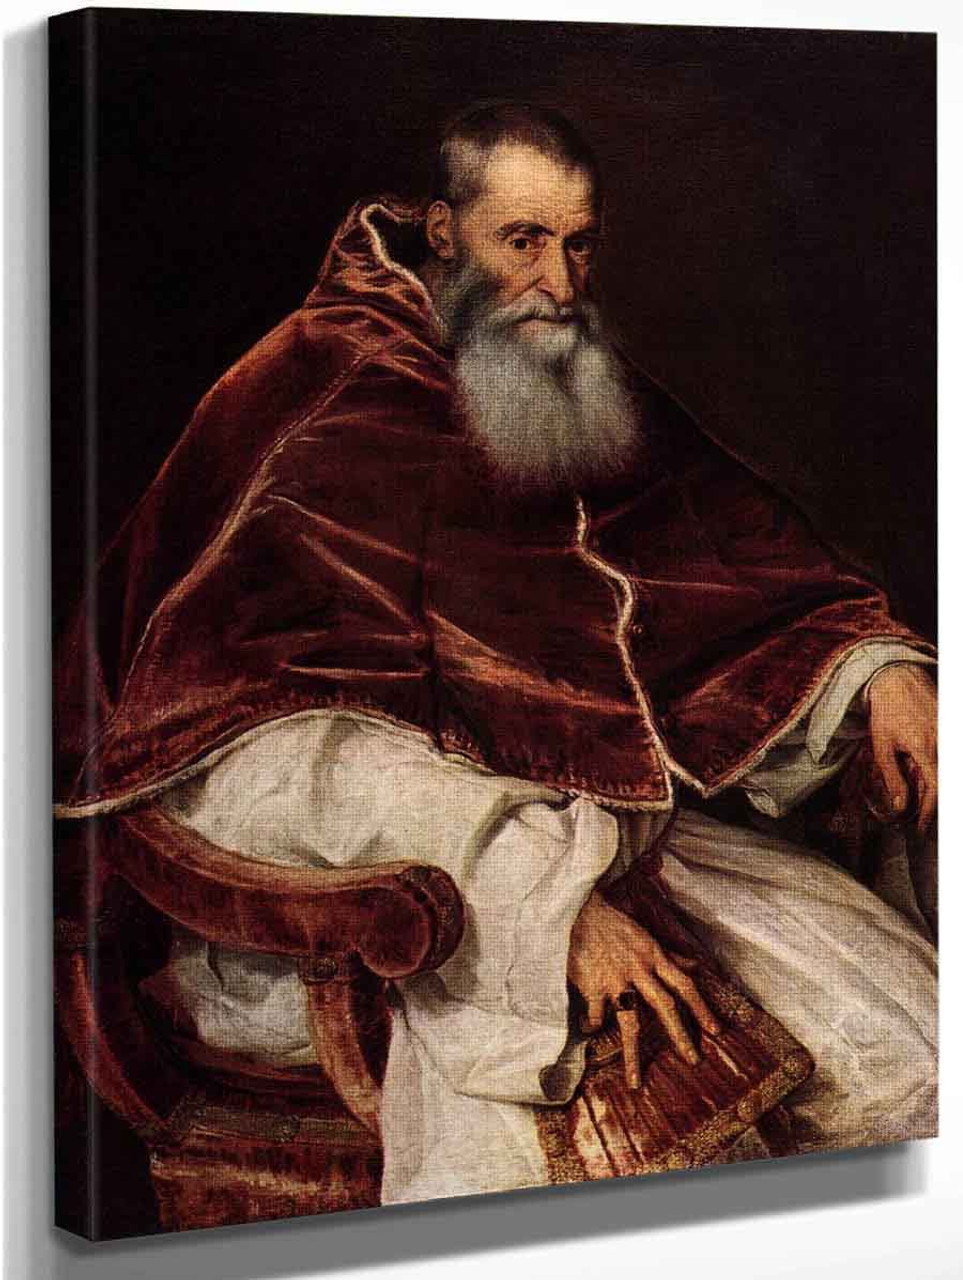 Pope Iii By Titian Art from Cutler